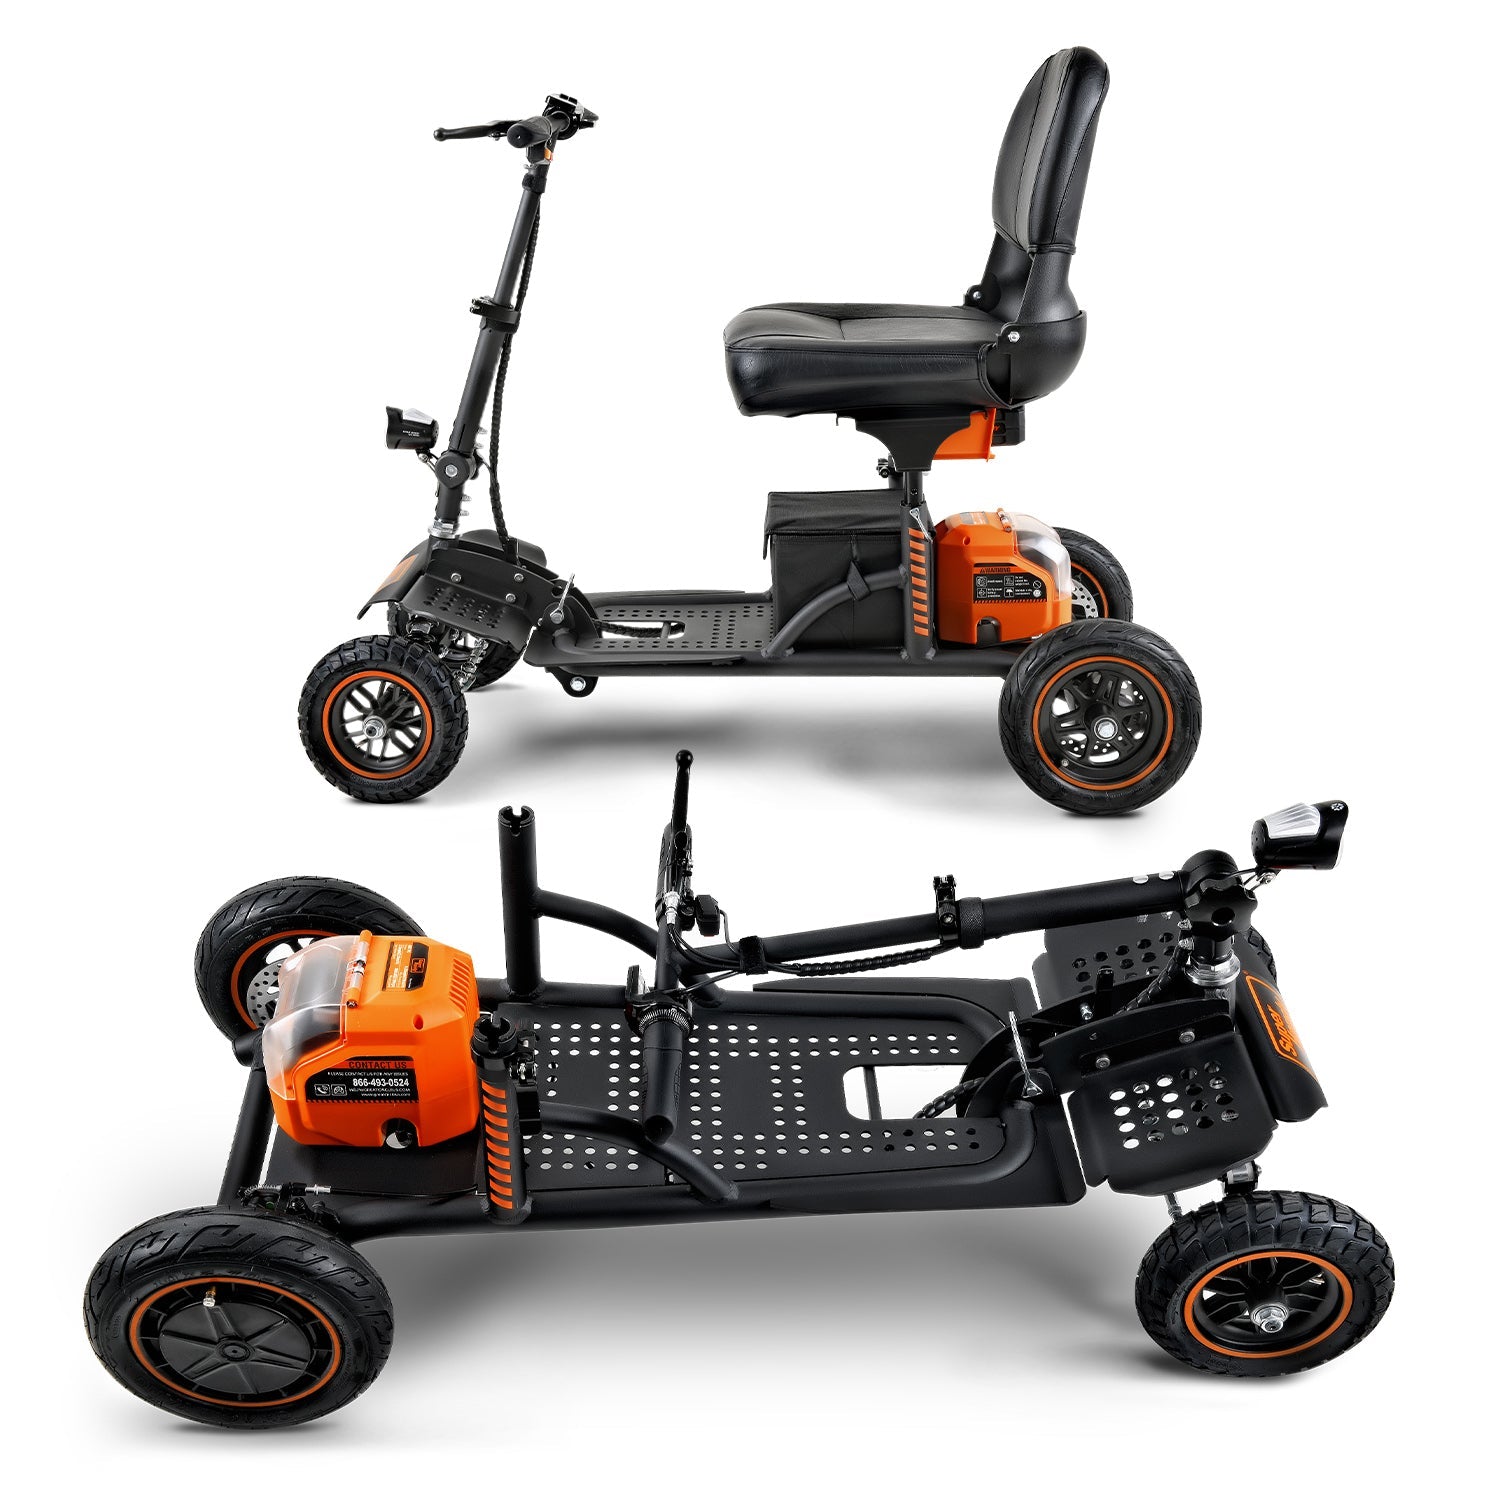 SuperHandy Mobility Scooter Pro - All-Terrain 4 Wheel Design, 48V 2Ah Battery, 330lb Capacity